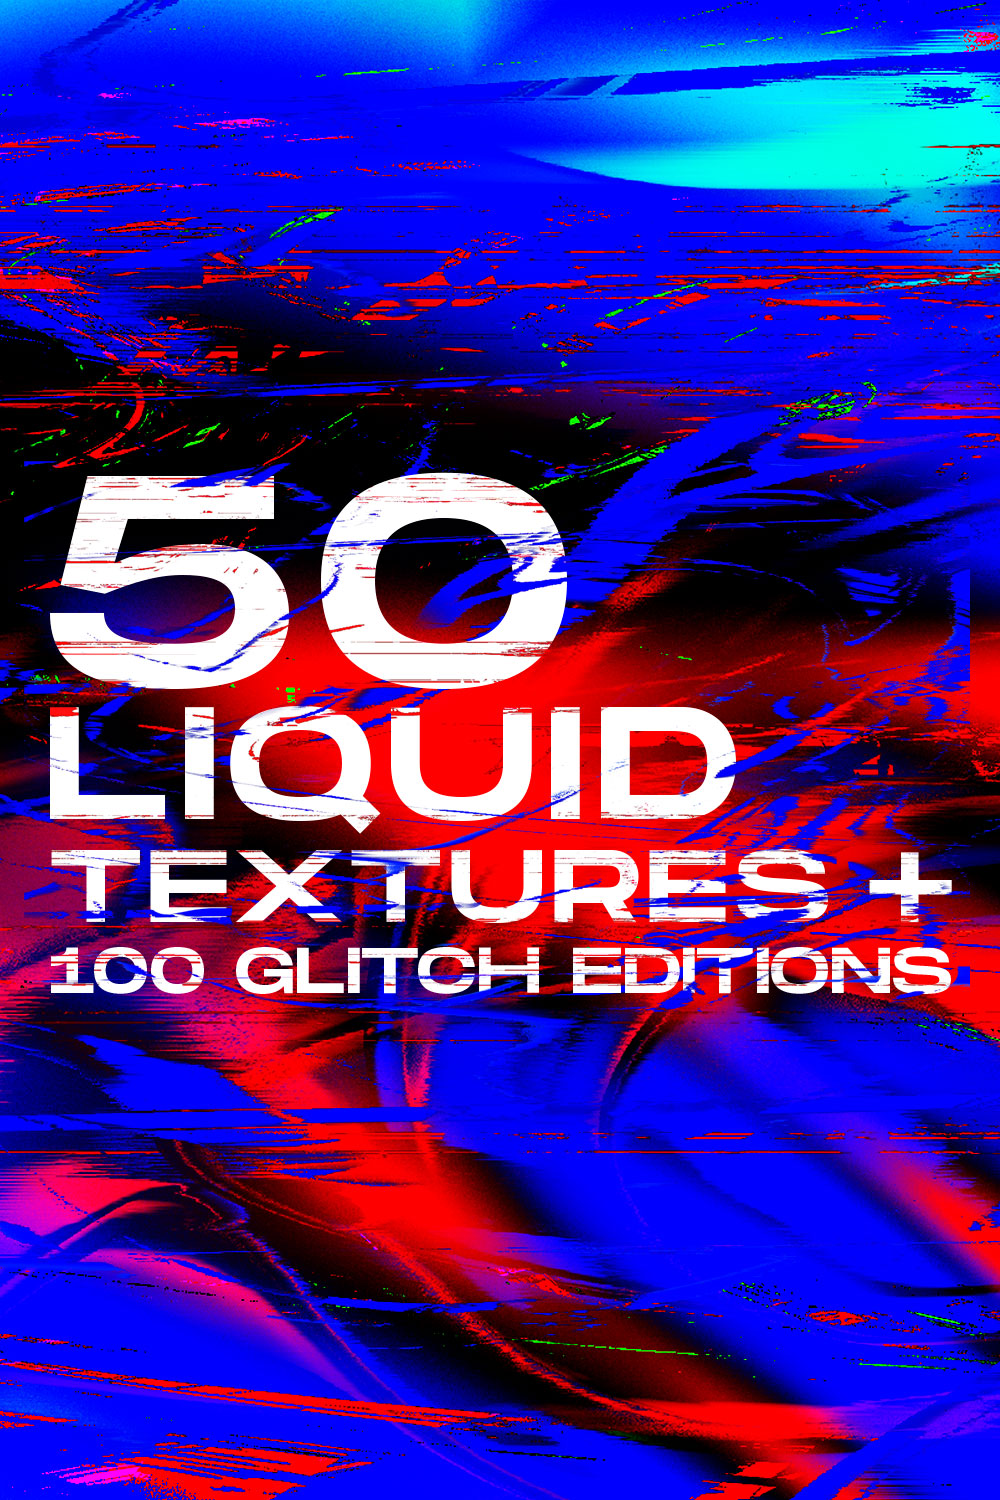 Liquid and Glitch Textures Facebook image.